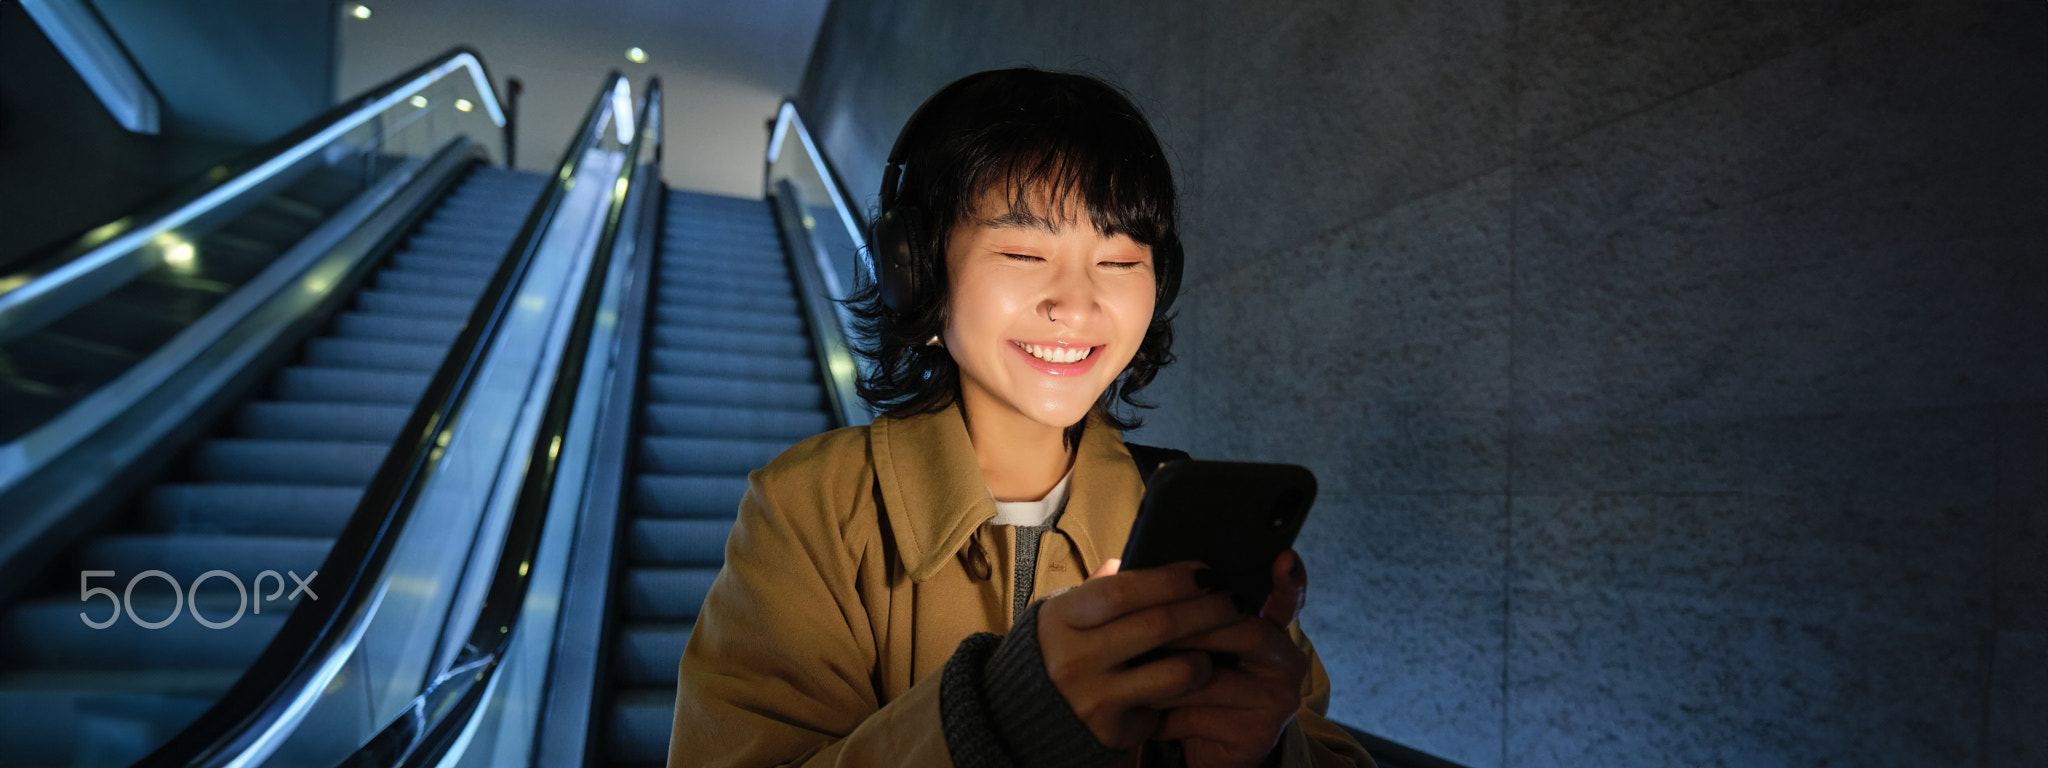 Smiling korean girl going down escalator in dark, holding mobile phone, using smartphone app